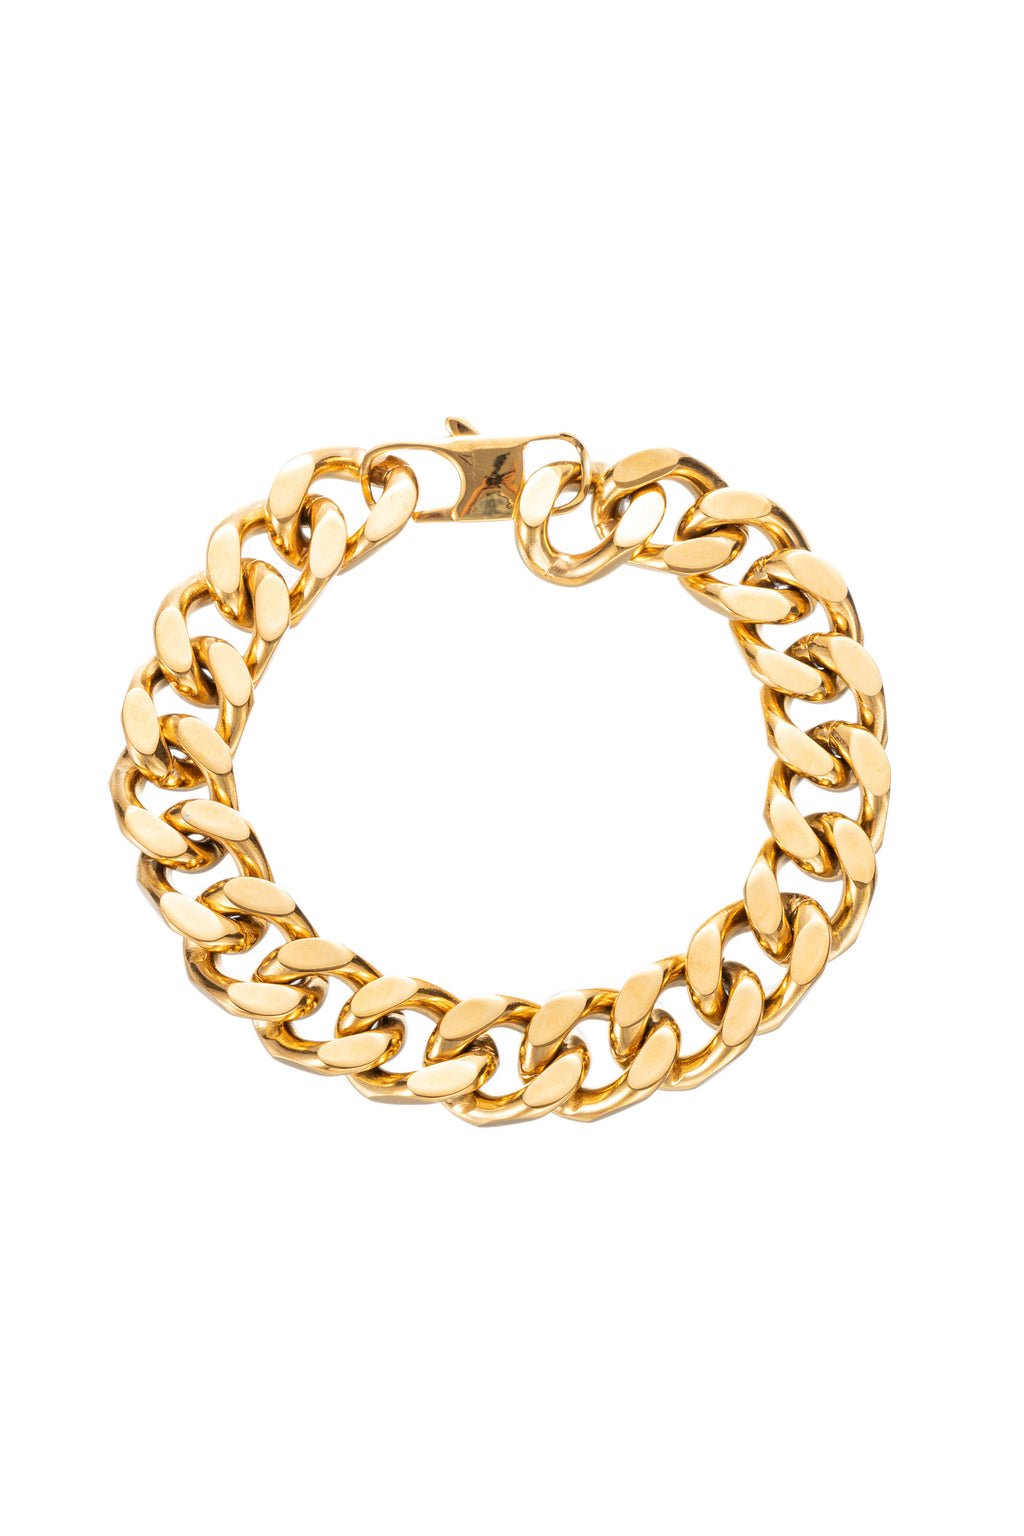 Gold tone titanium single strand chain link bracelet.